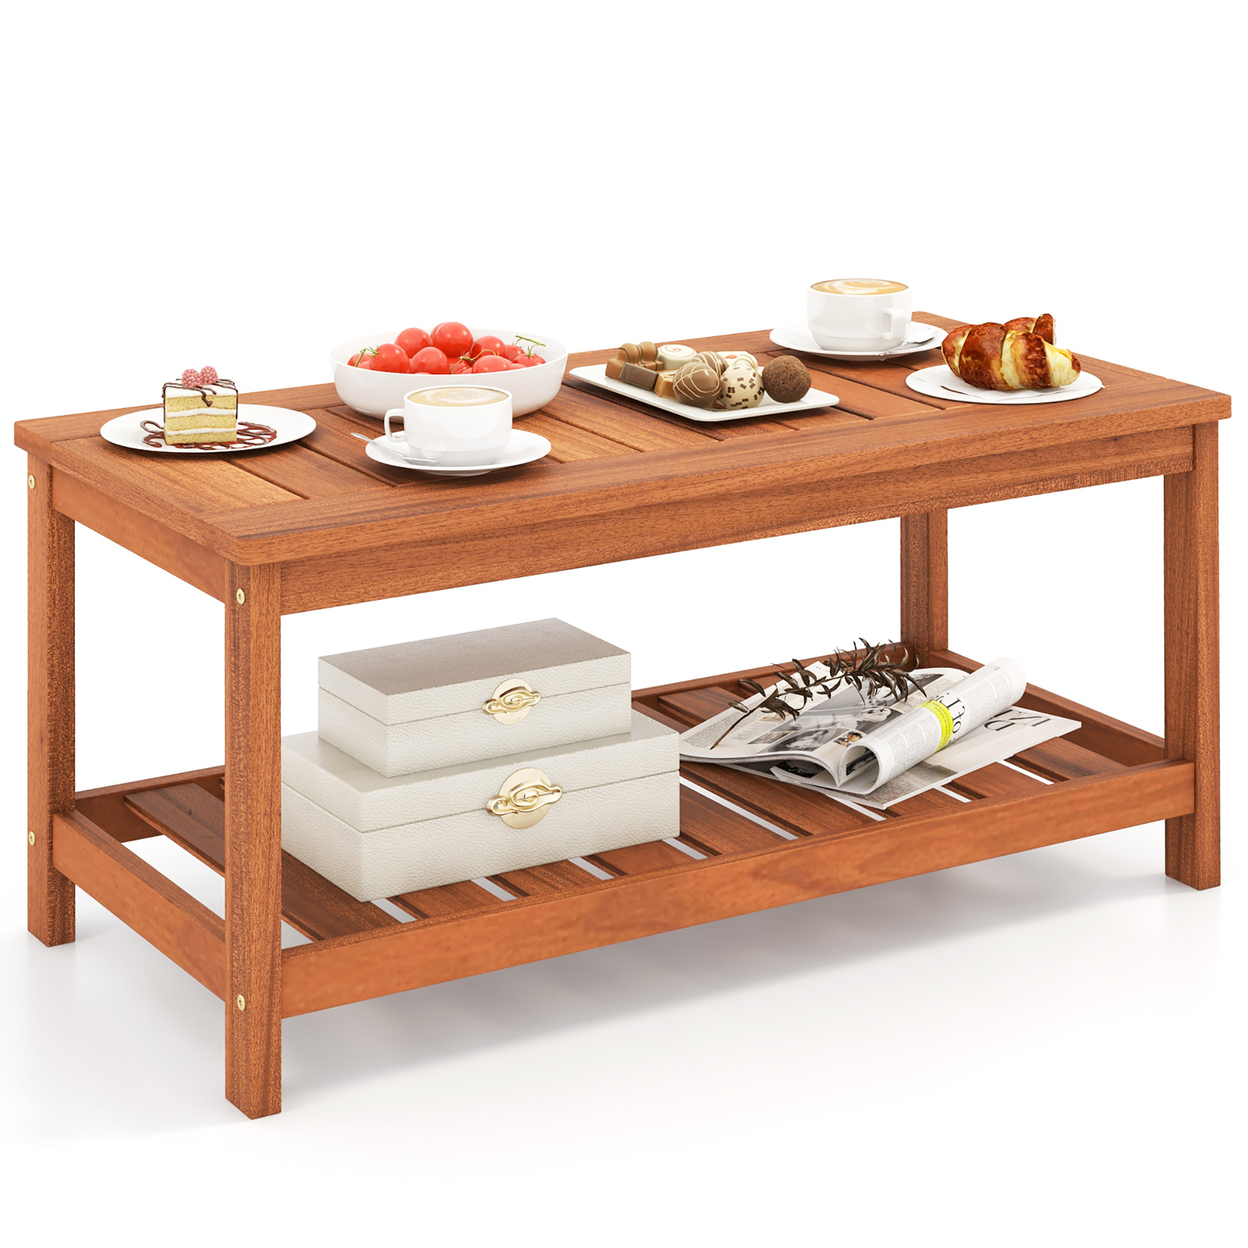 Hardwood Outdoor Patio Coffee Table 2-Tier Coffee Table W/ Slat Tabletop & Storage Shelf Natural